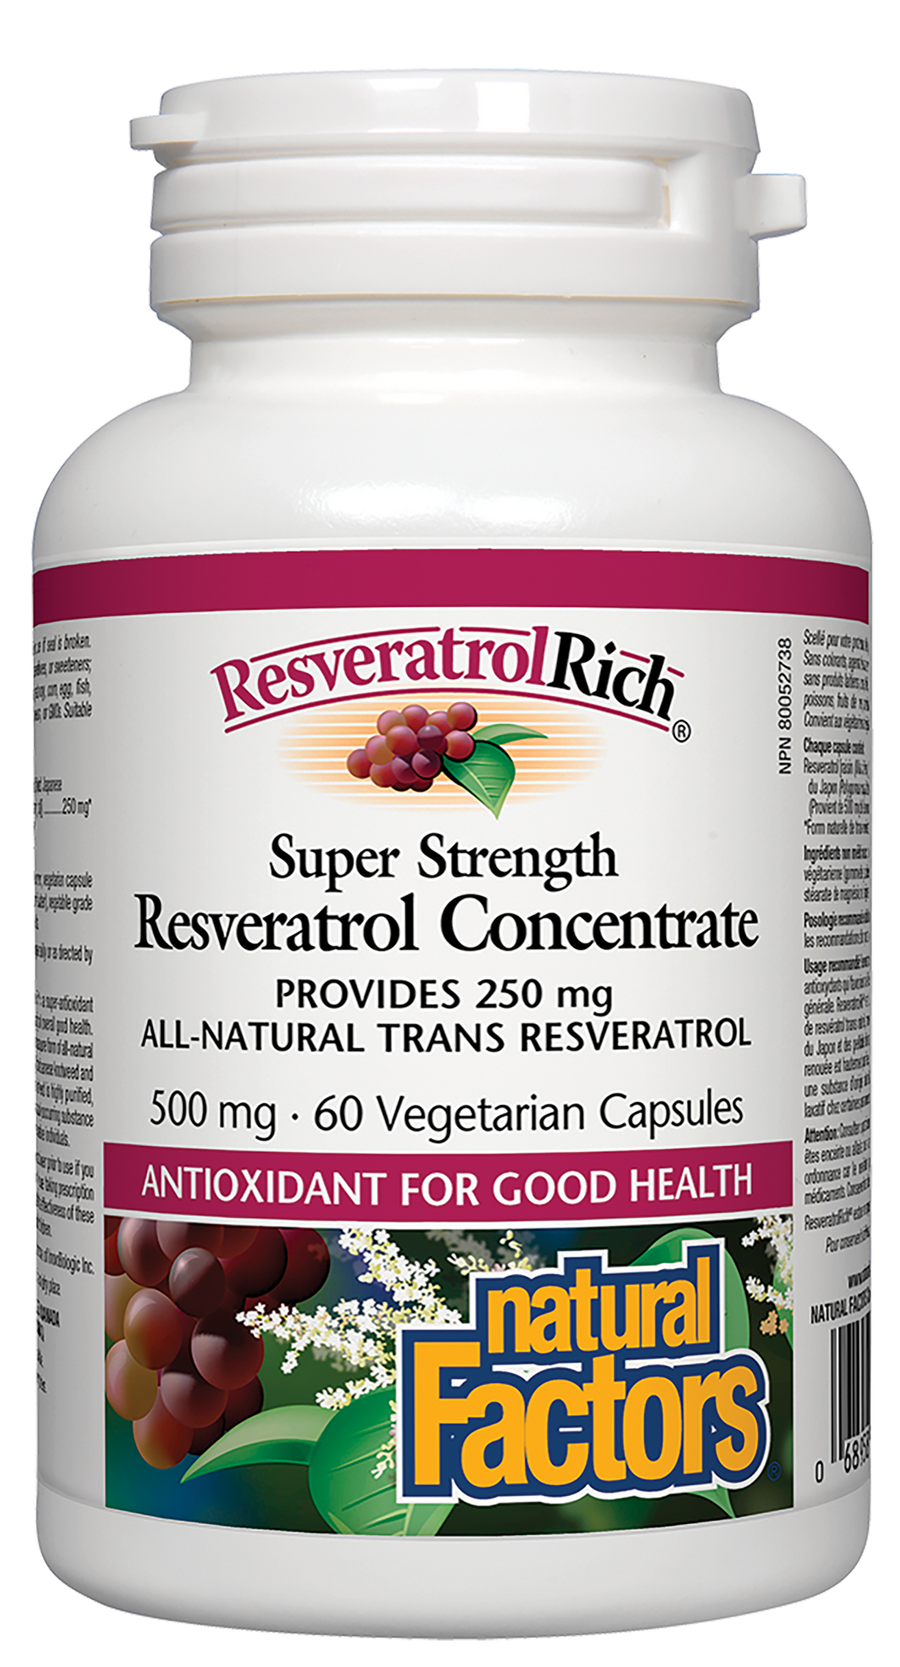 Natural Factors Super Strength Resveratrol Concentrate 500 mg 60 Veg. Capsules